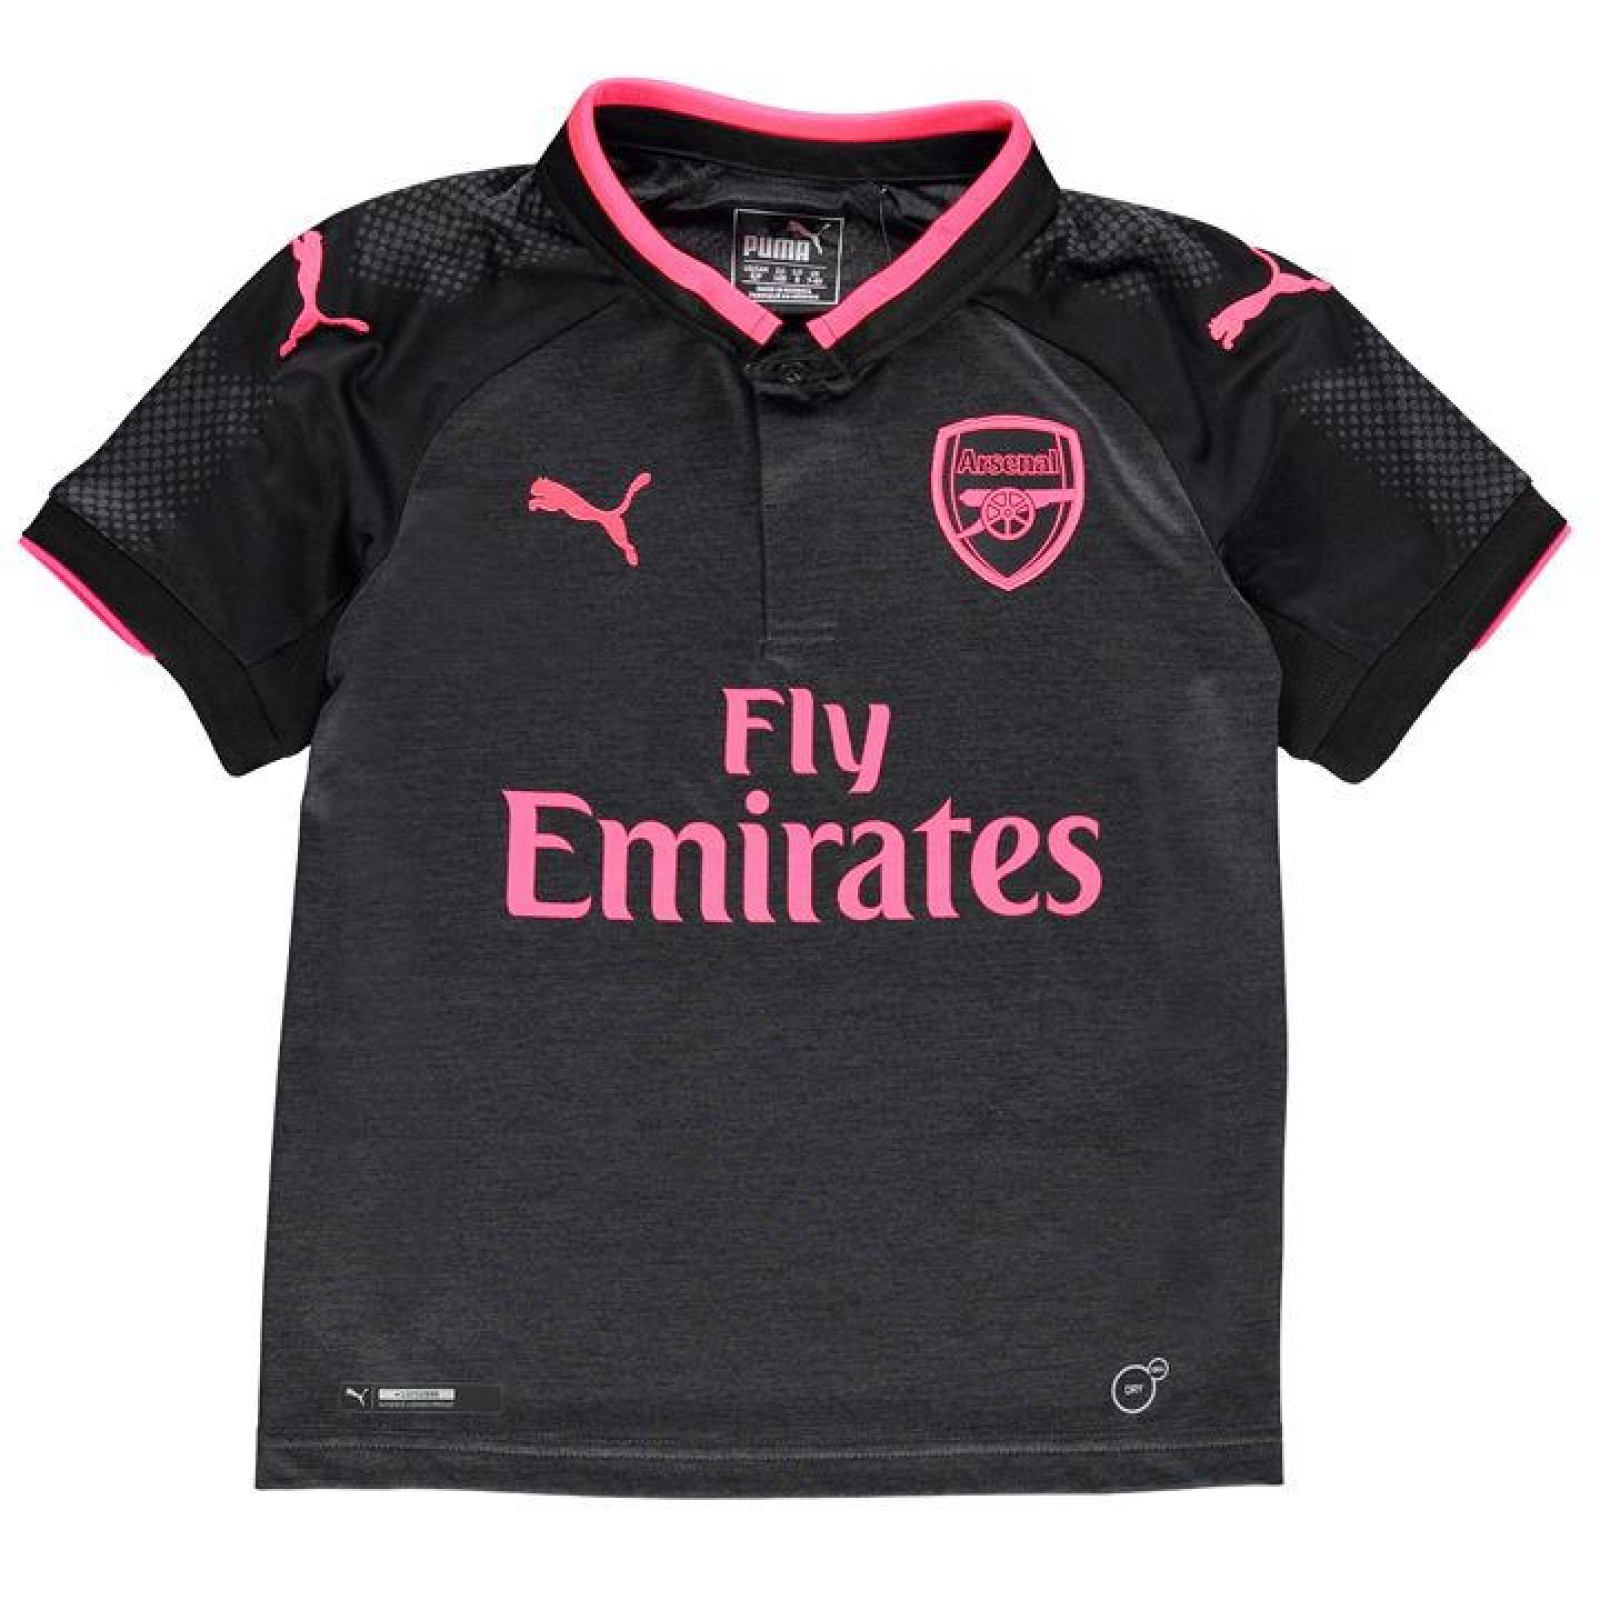 Arsenal Third Football Kit from £25.99 